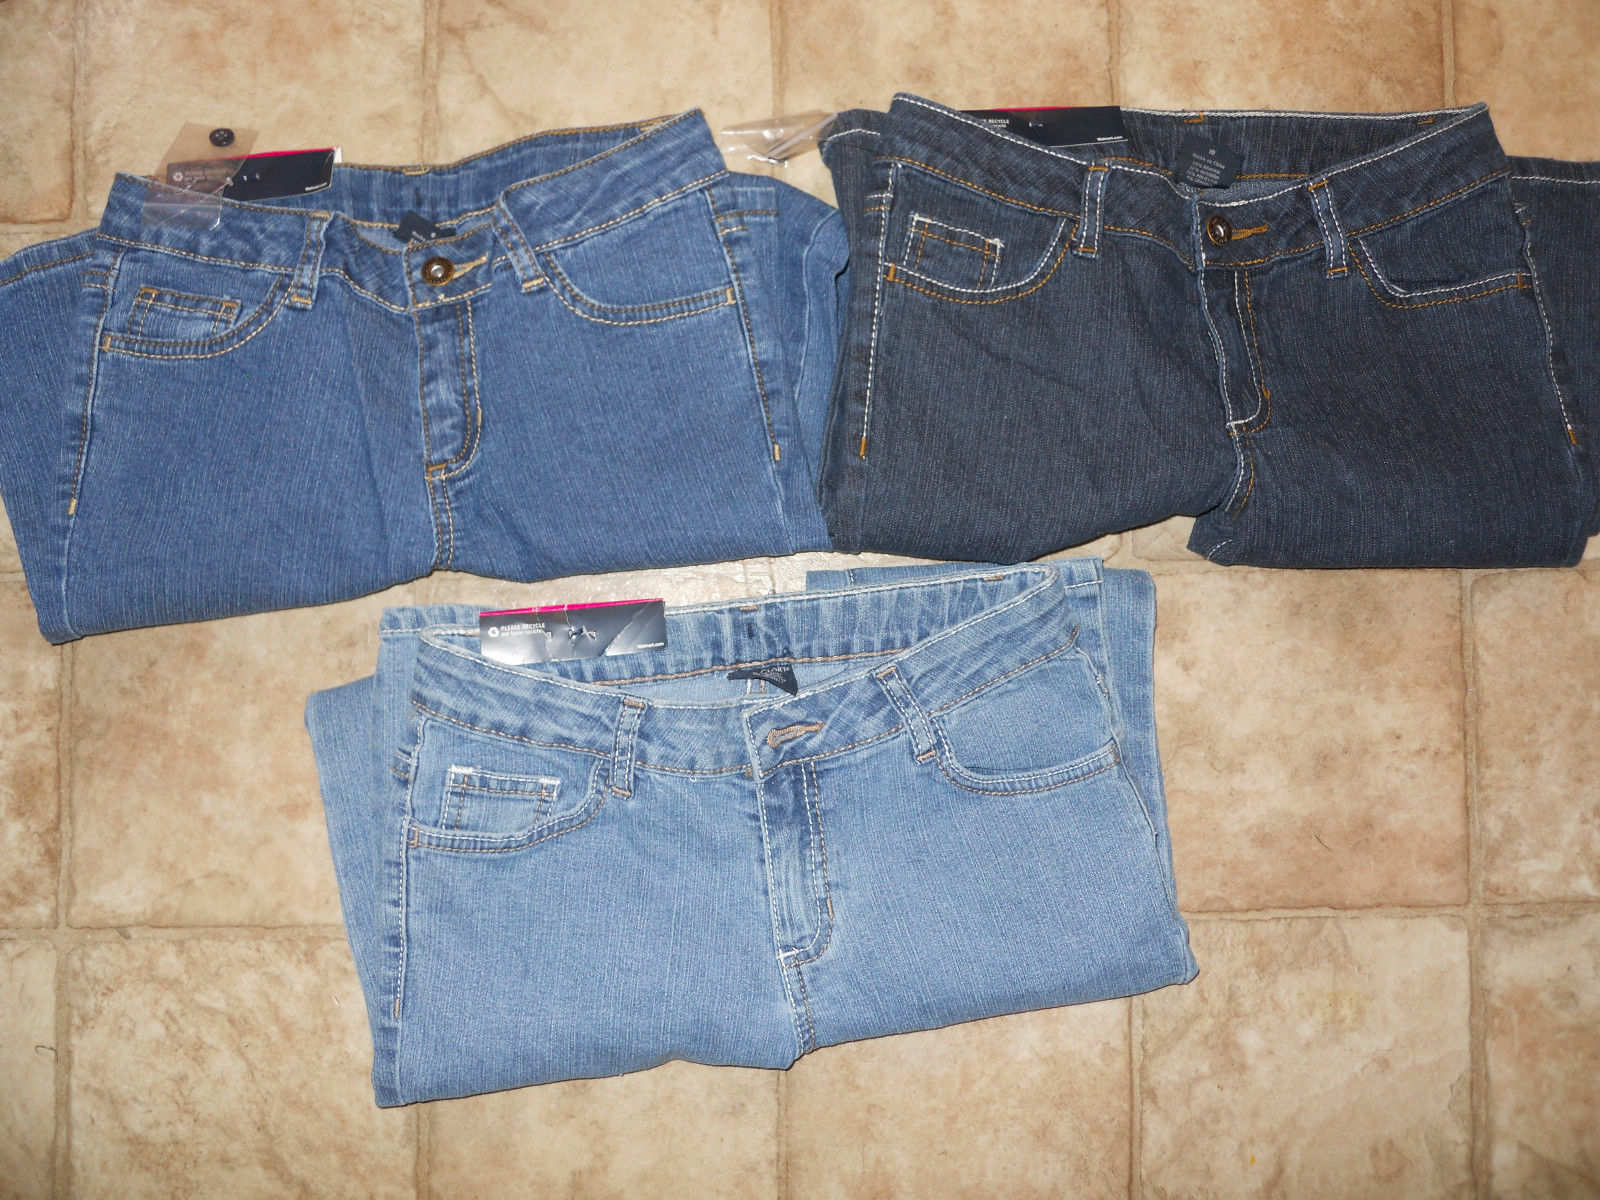  Bootcut Jeans MidRise Girls Blue - $13.98